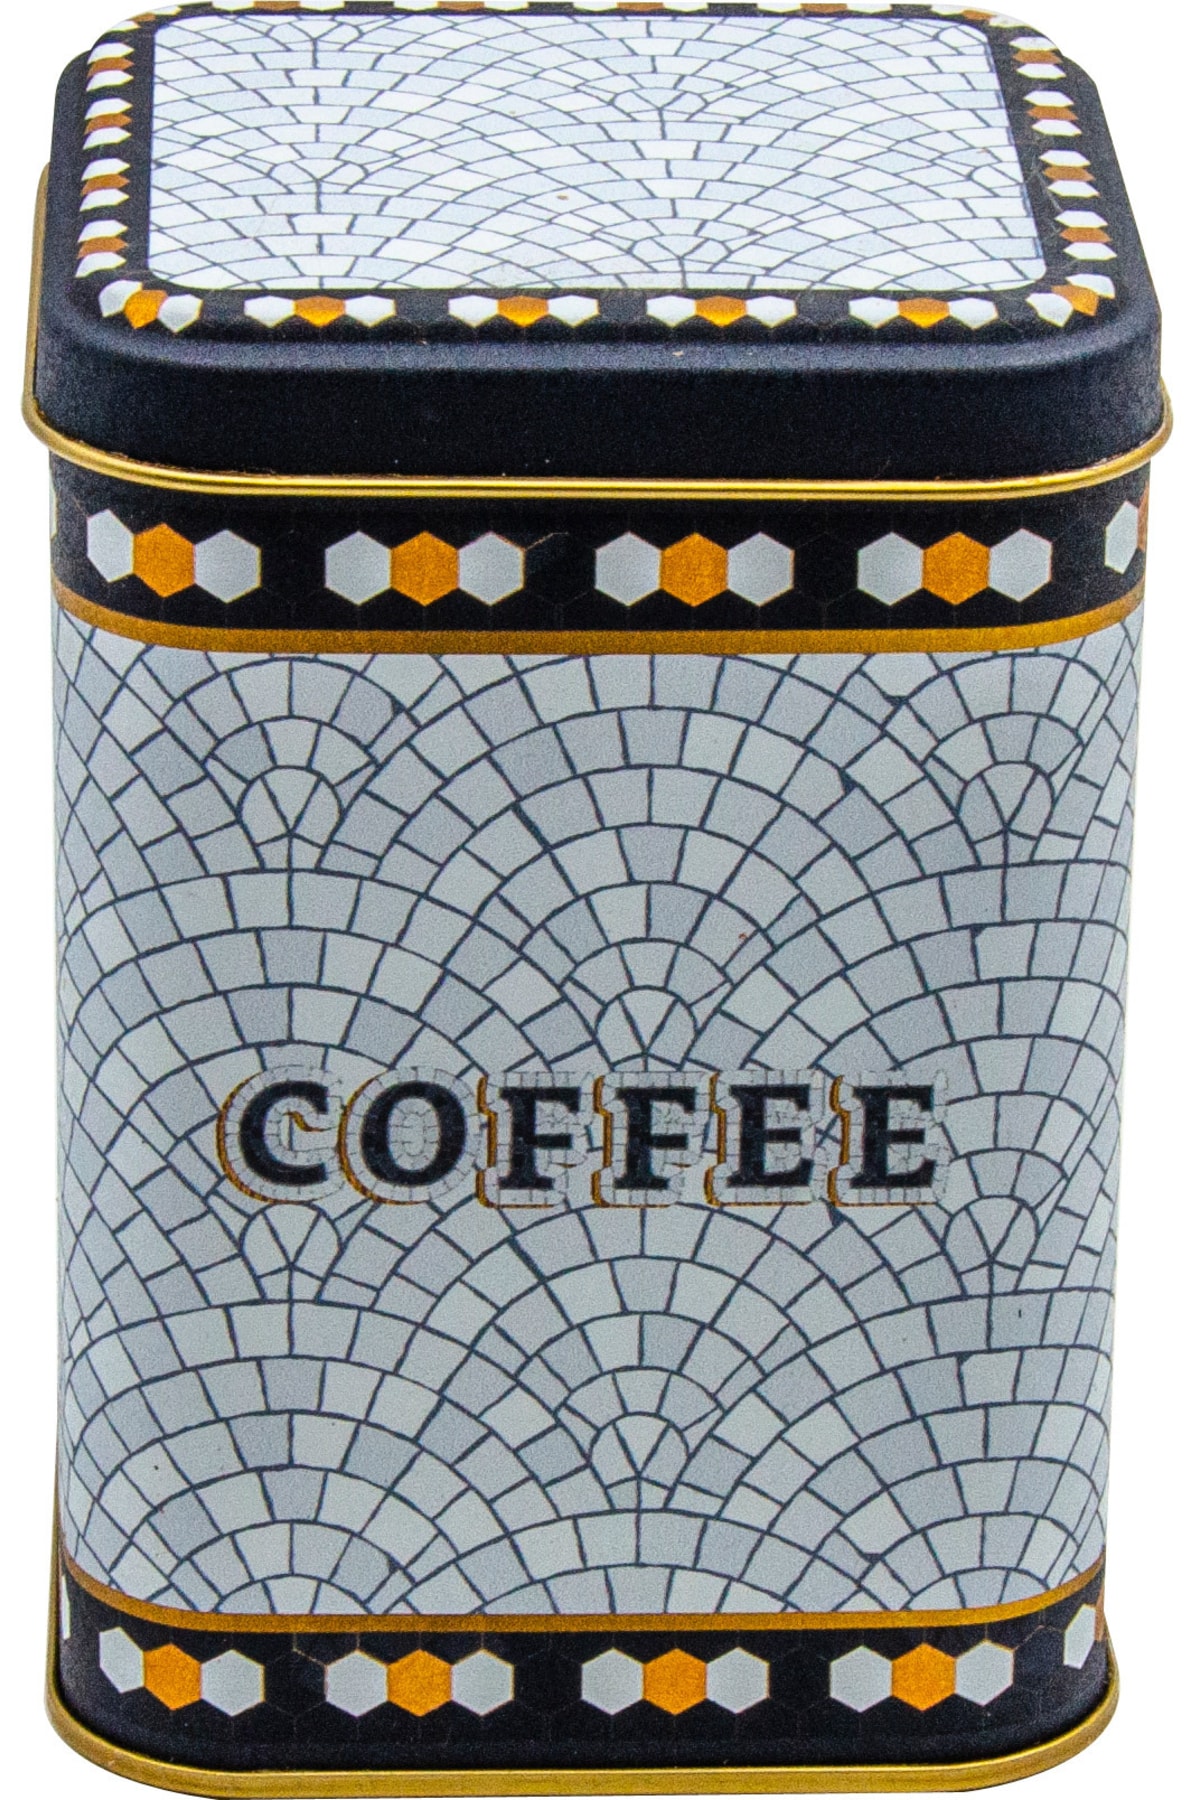 Mosaic Coffee Desenli Kare Metal Kutu, 9 x 9 x 12.5 cm, 1 lt